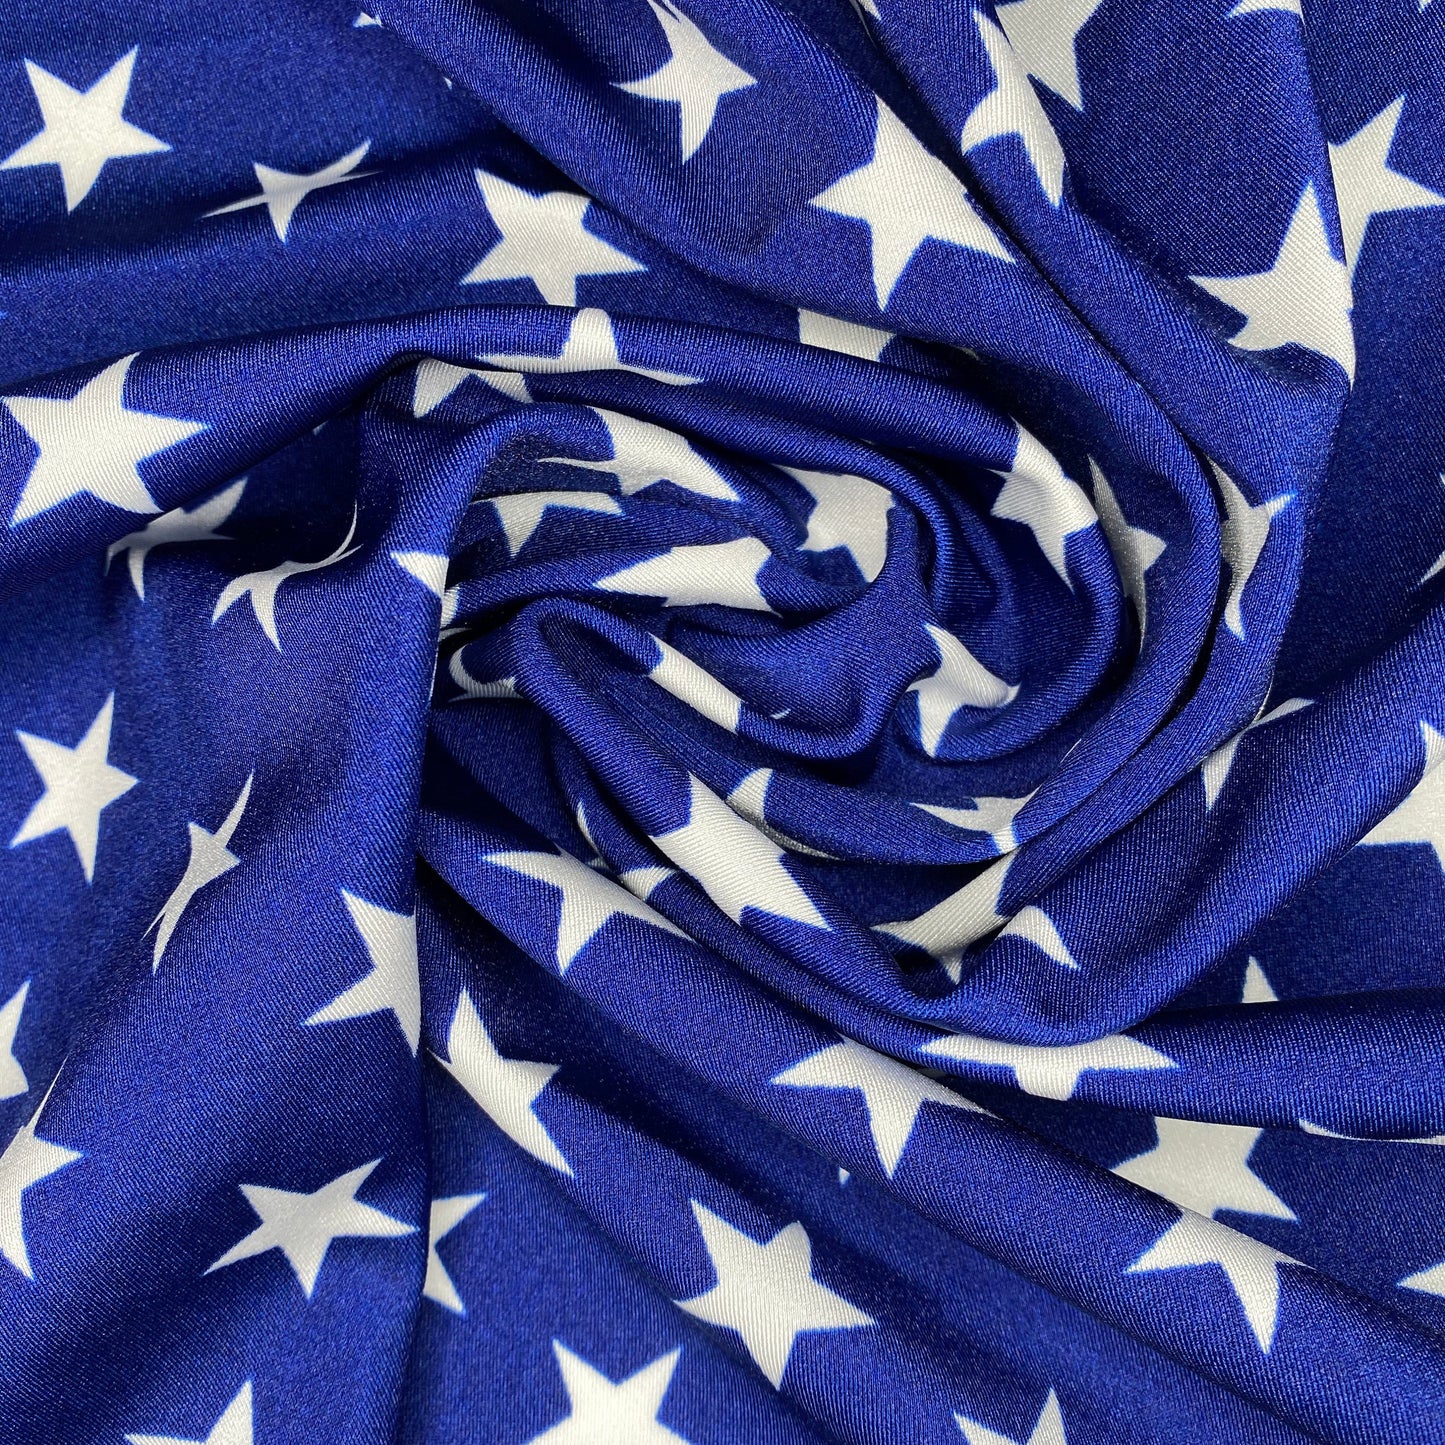 Printed Nylon Spandex - Stars - Blue/White